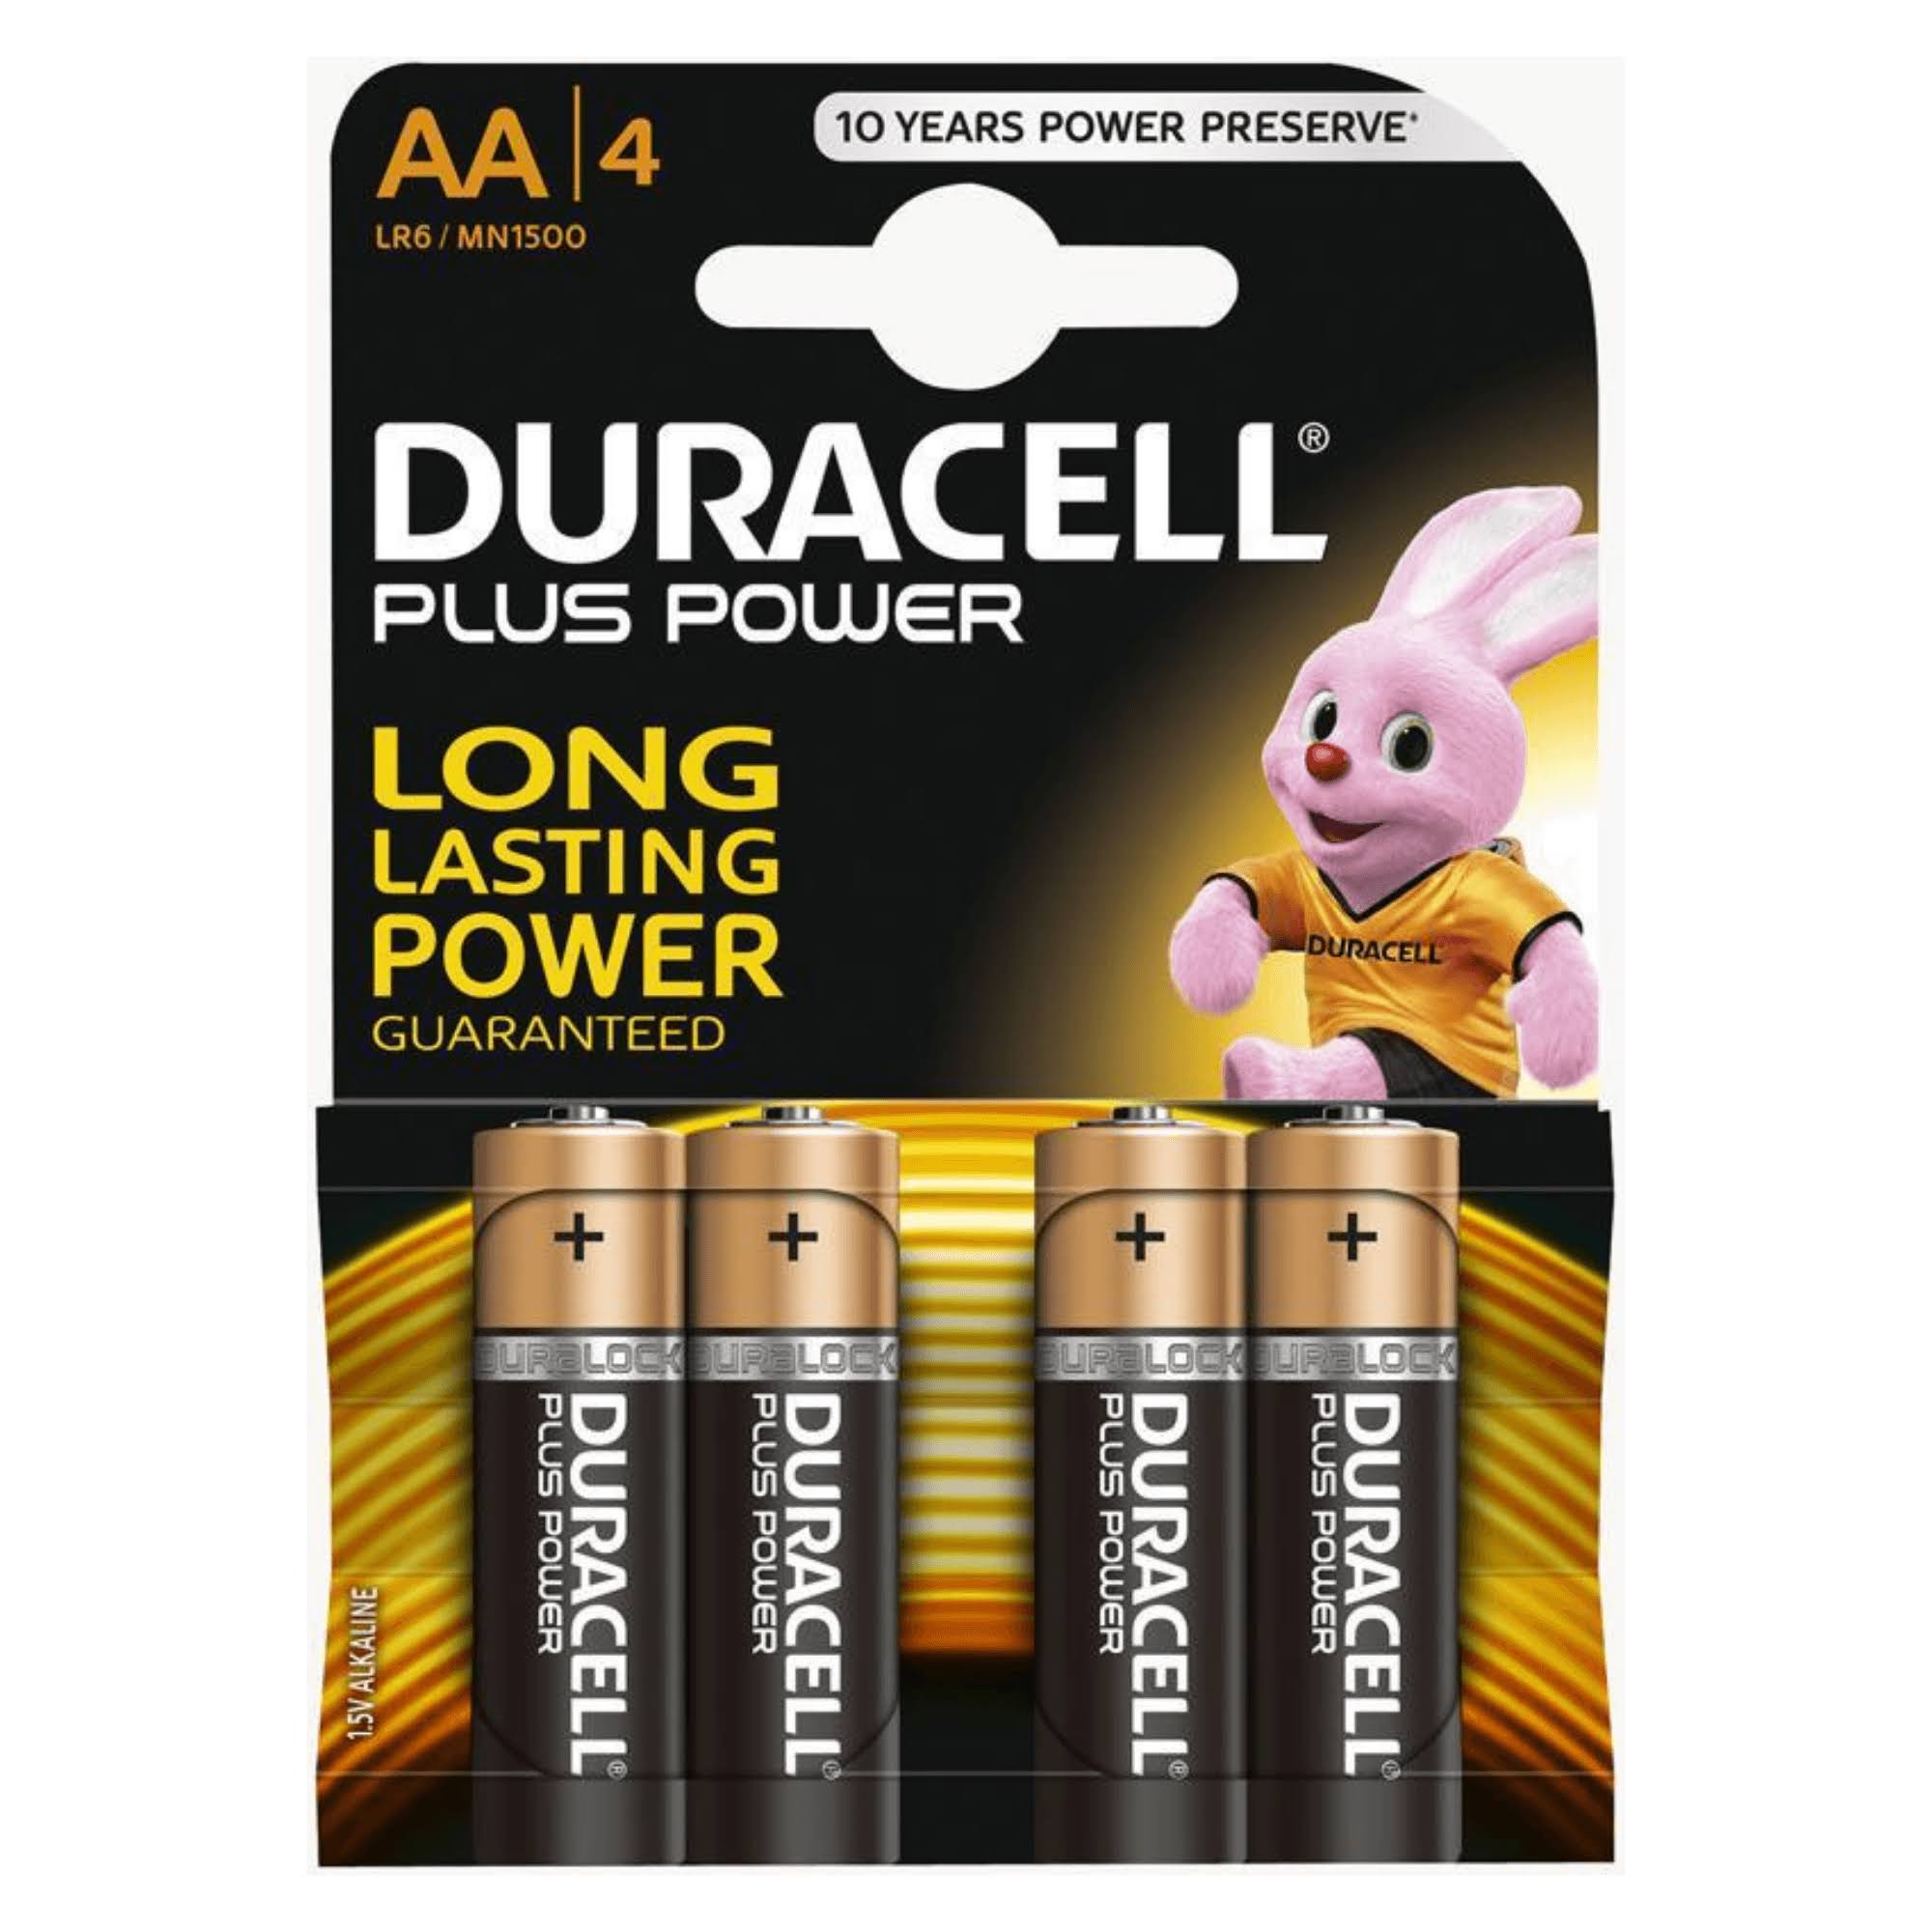 Duracell Plus Power Alkaline AA Batteries Pack - 4pk